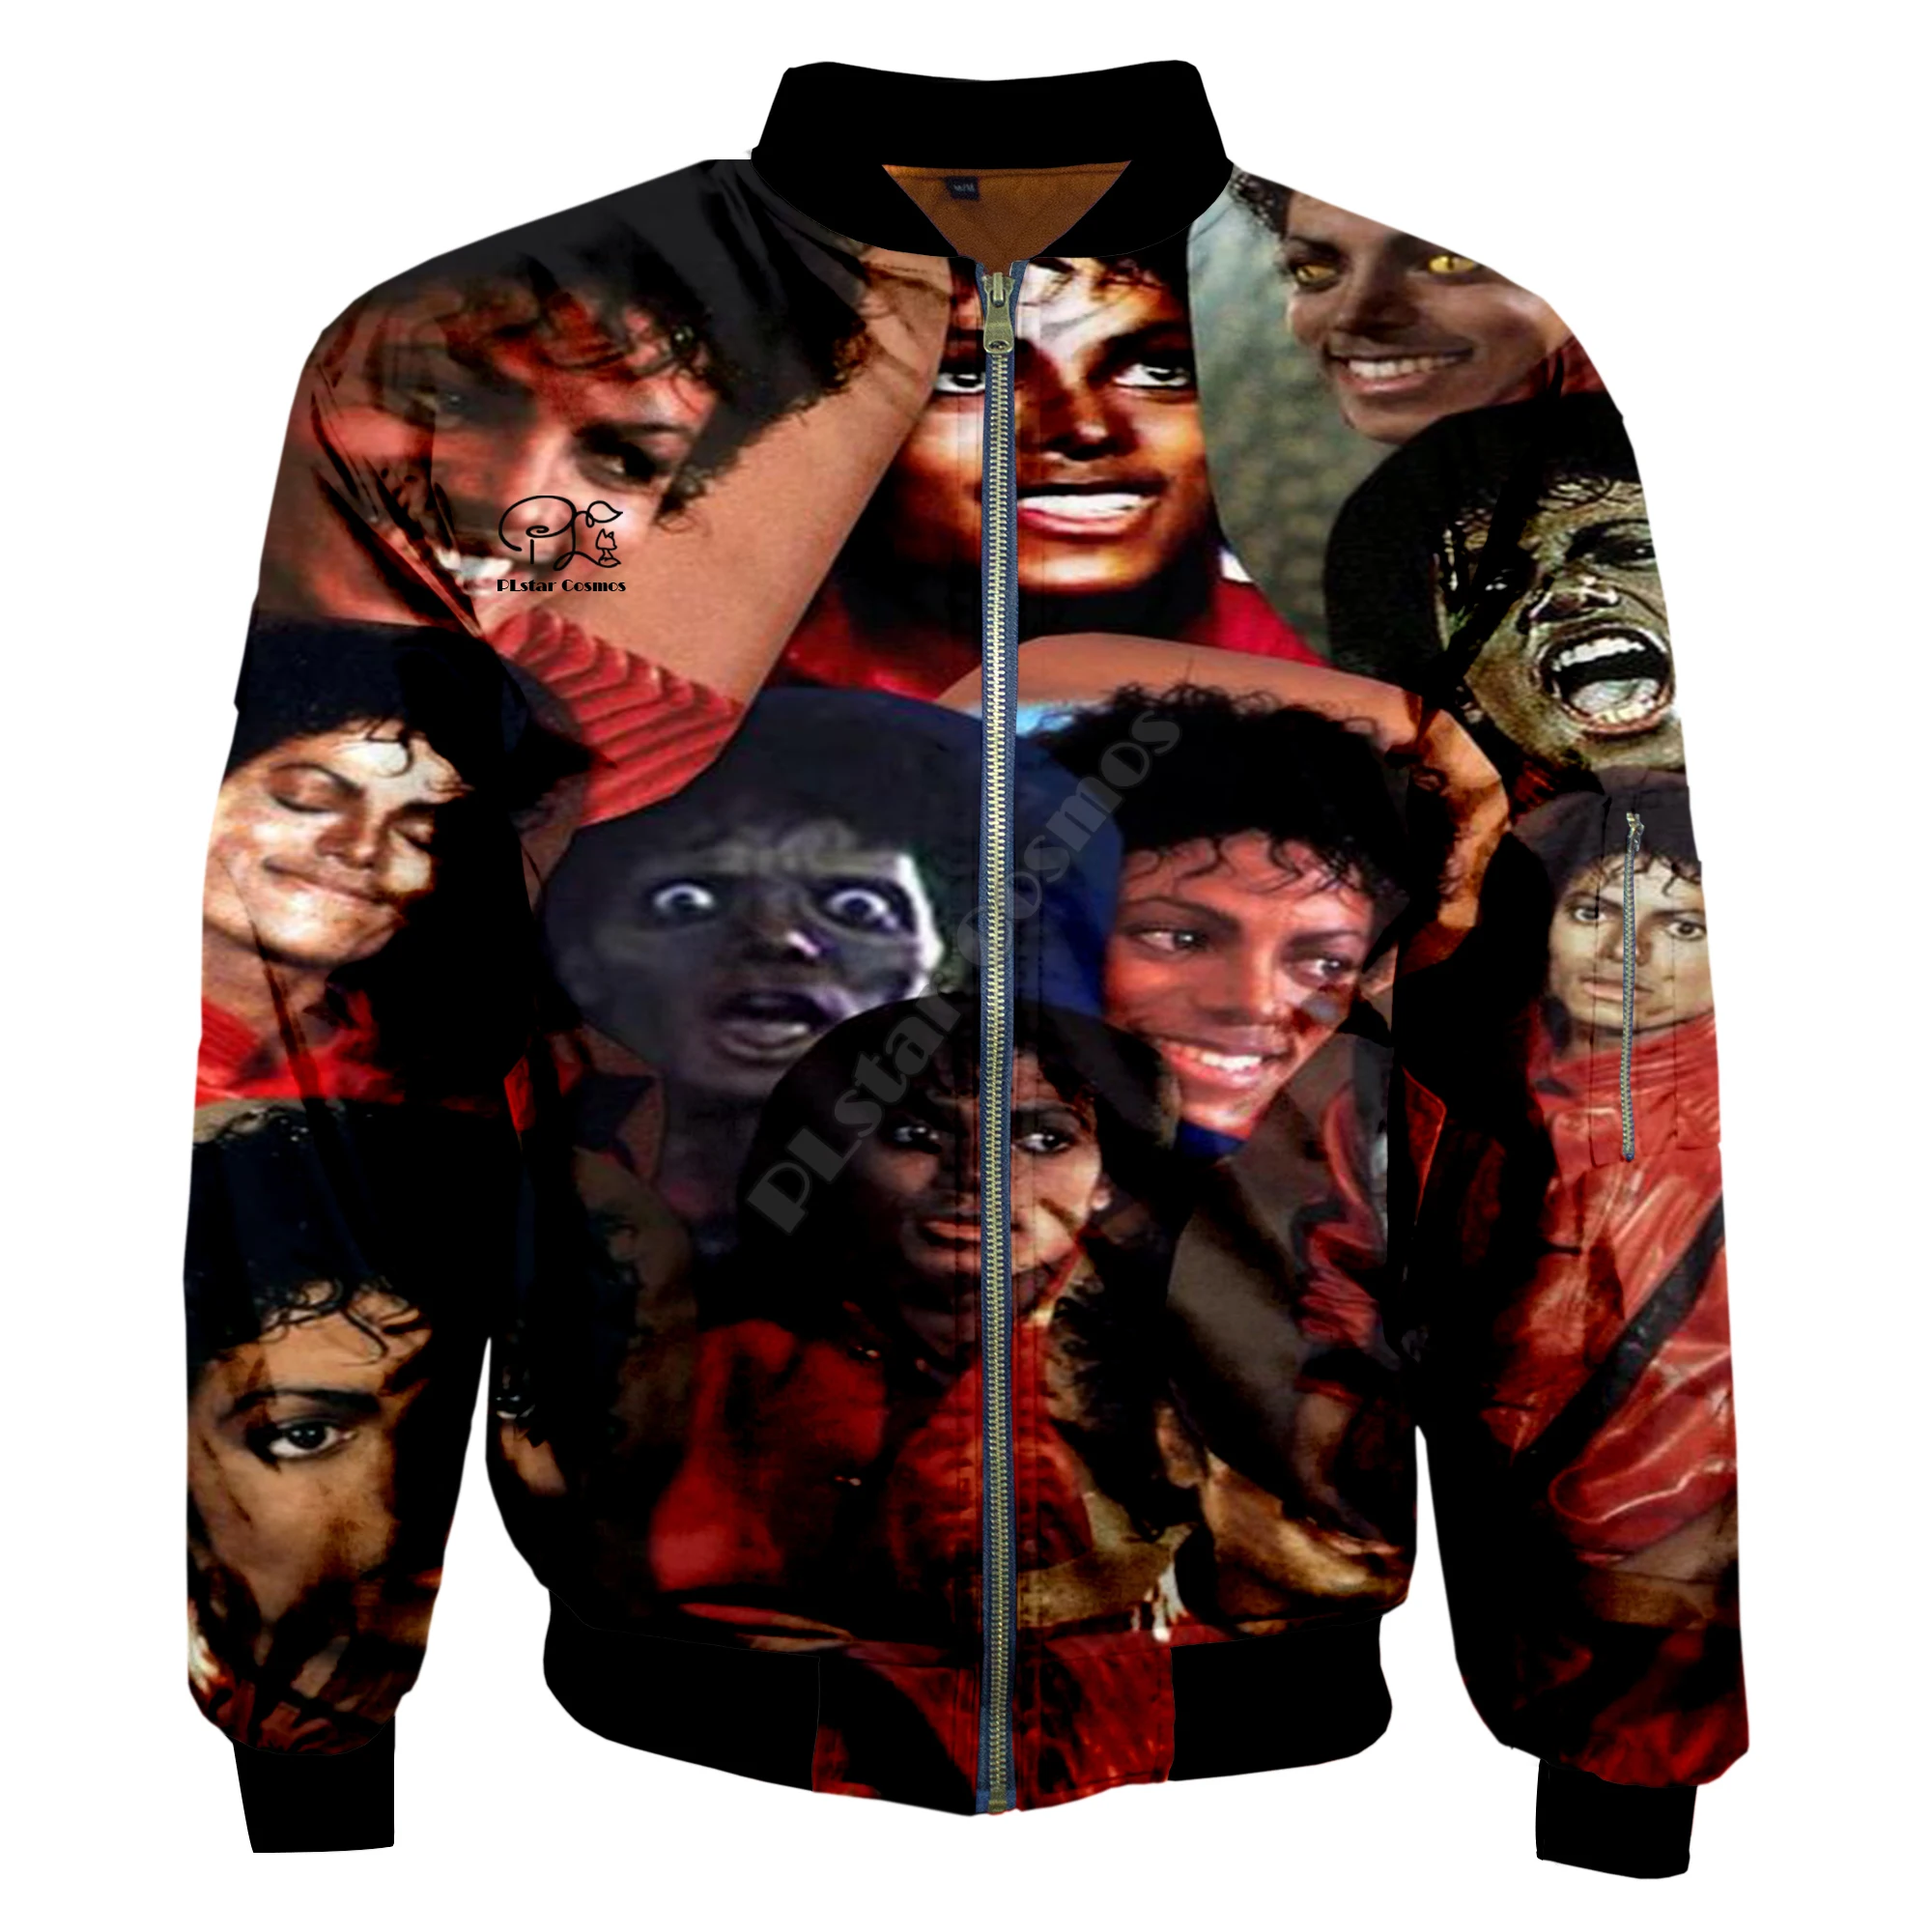 Michael Jackson Zipper/Bomber Jackets Men’s Clothing Women’s Clothing cb5feb1b7314637725a2e7: jacket|Jacket|Jacket|Jacket|Jacket